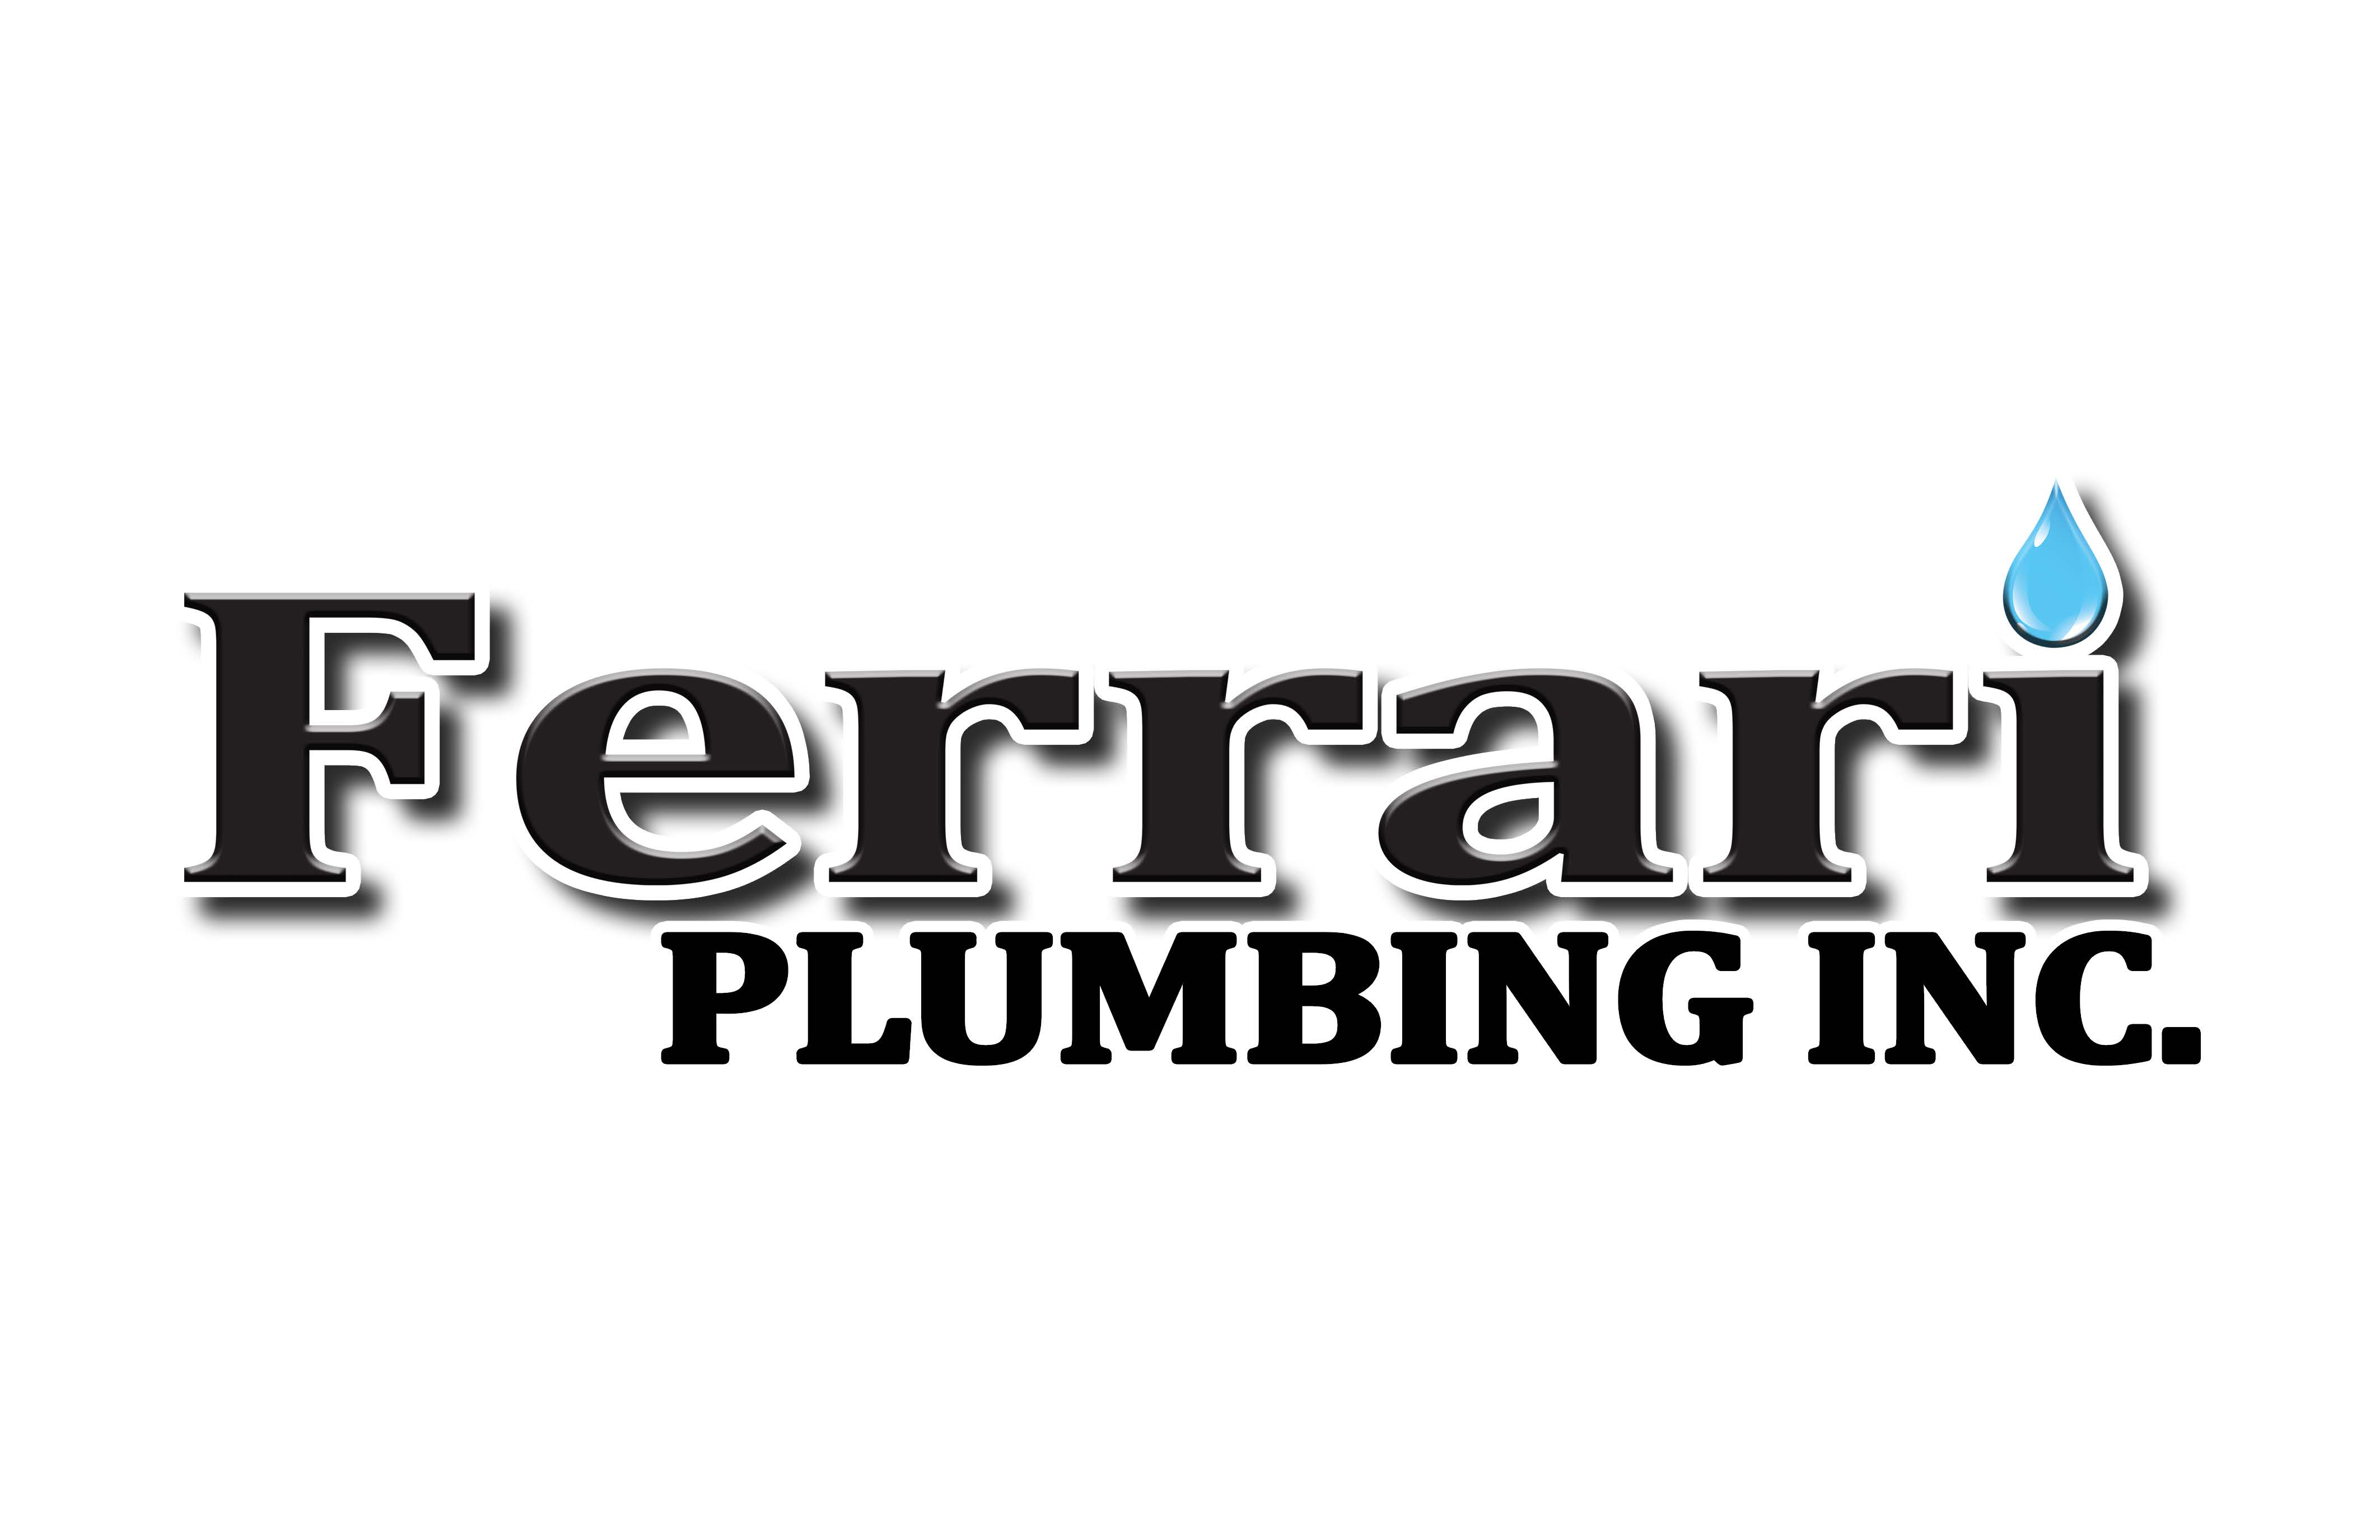 Ferrari Plumbing Inc.